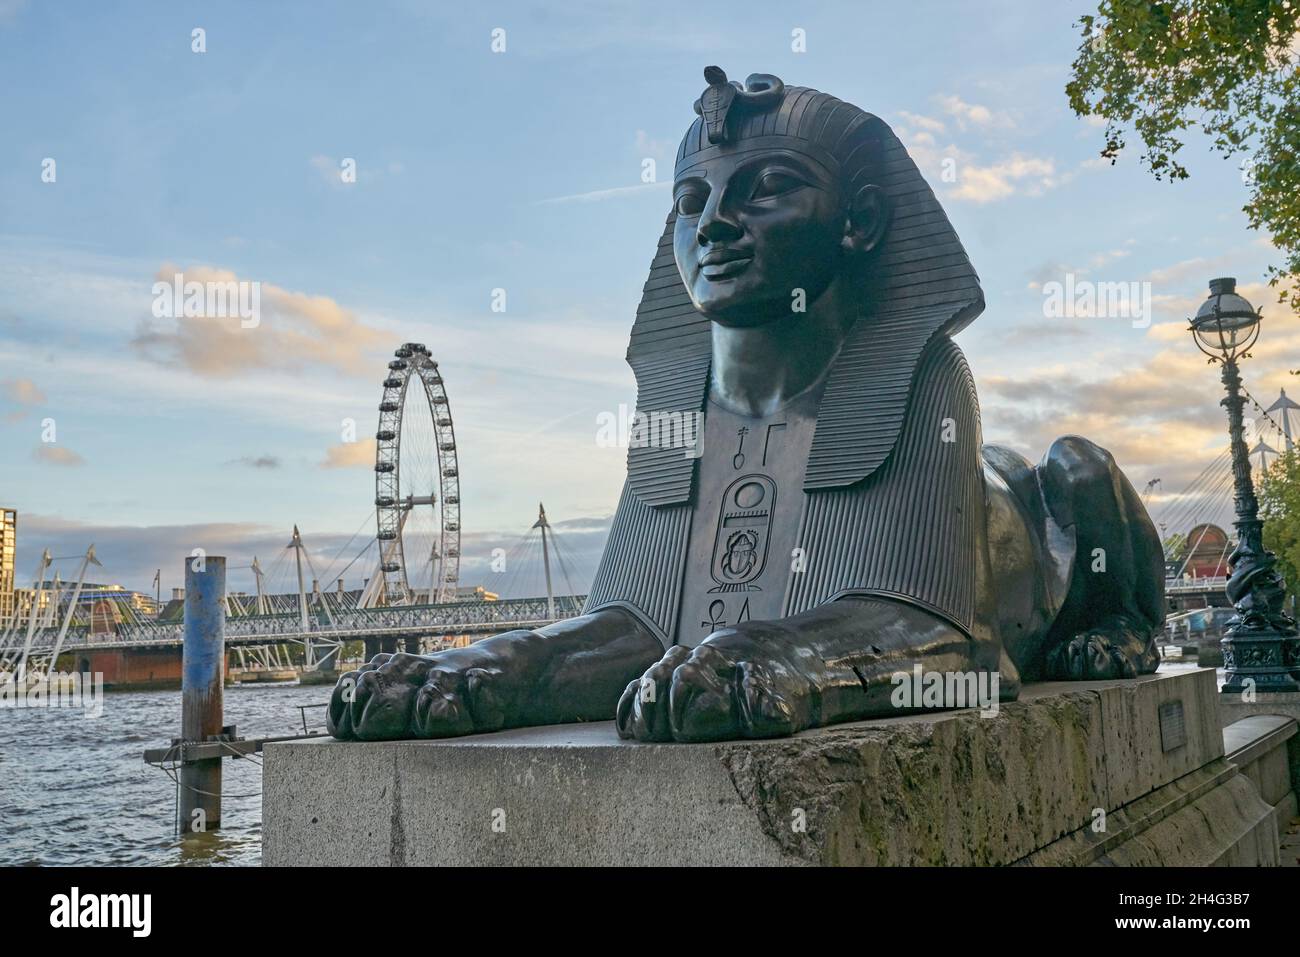 Statue of Sphinx cleopatra;s needle london Stock Photo